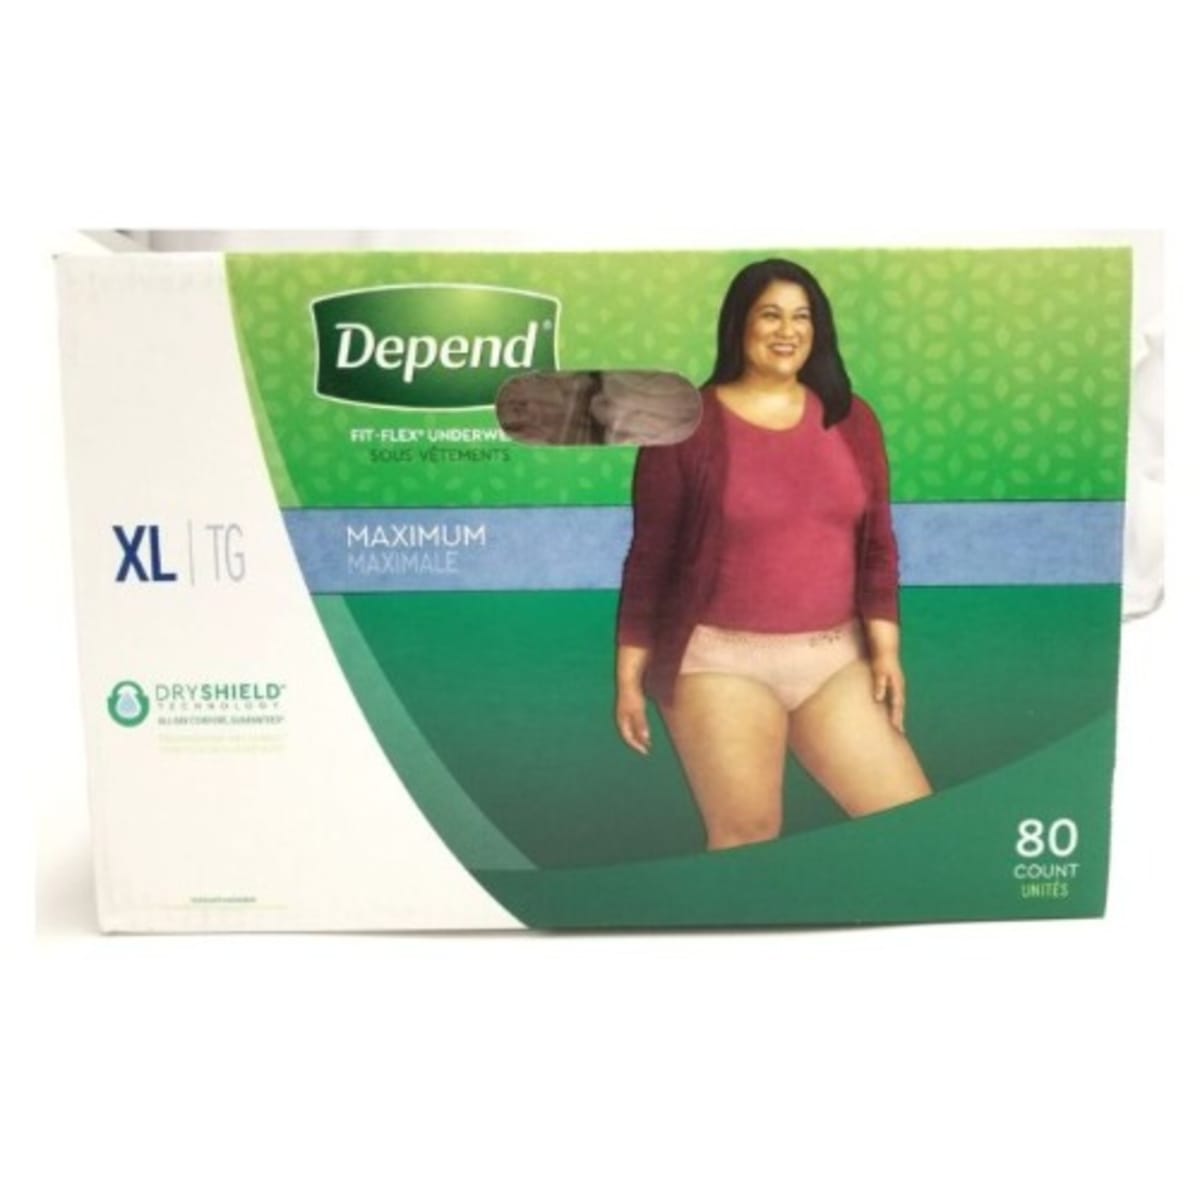 Depend Fit-flex Maximum Absorbency Underwear For Women (xl) - 80 Ct